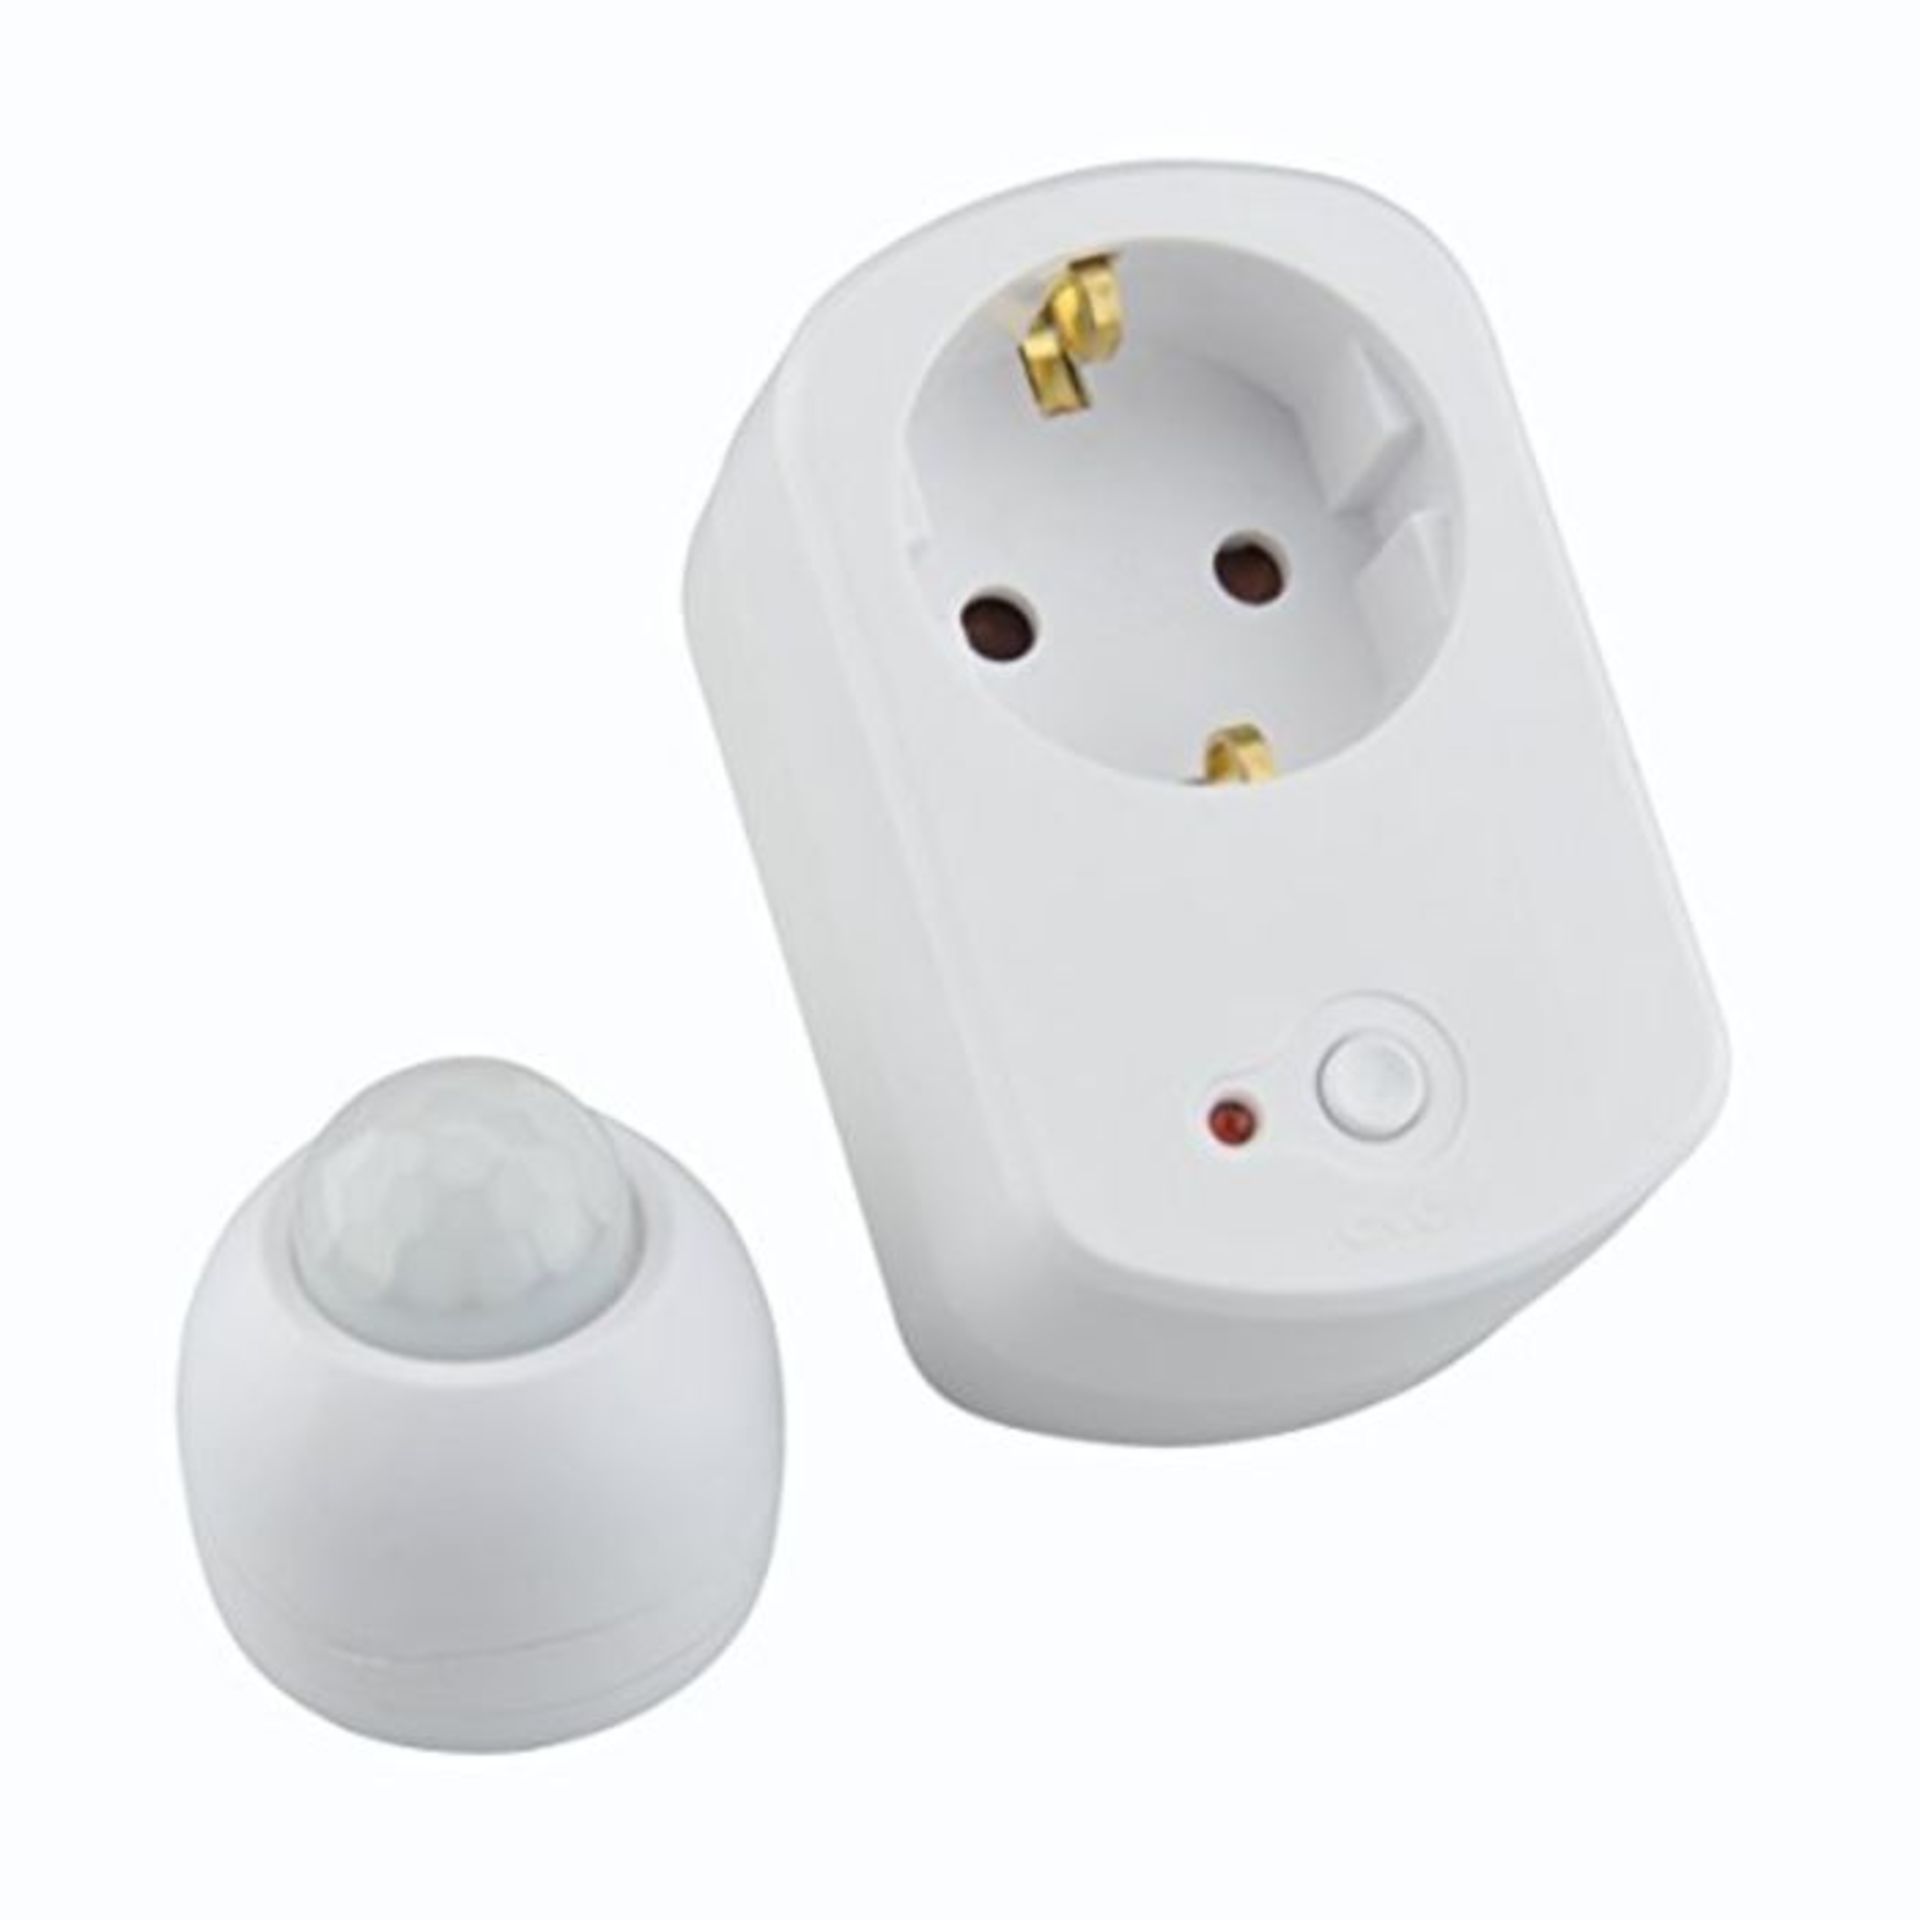 Unitec 47598 Adaptor Plug with Wireless Motion Sensor White